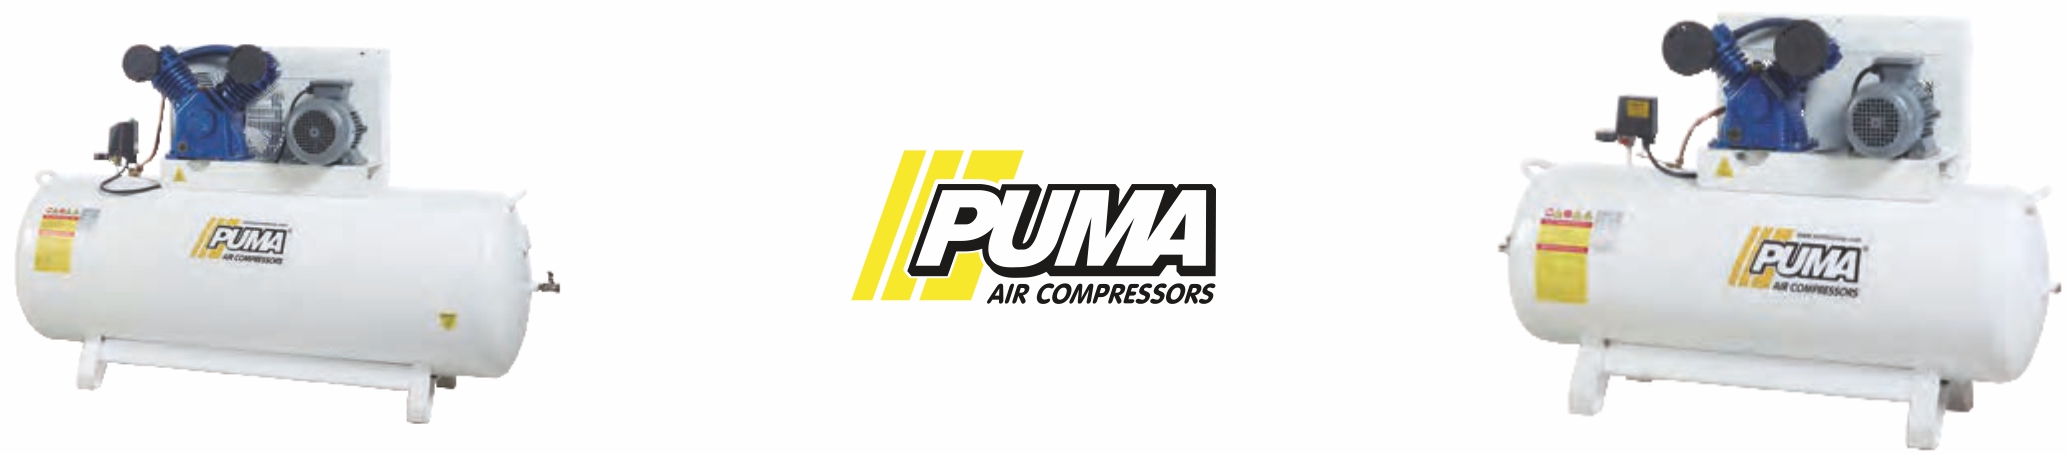 puma-maer-ltd-hava-kompresorler